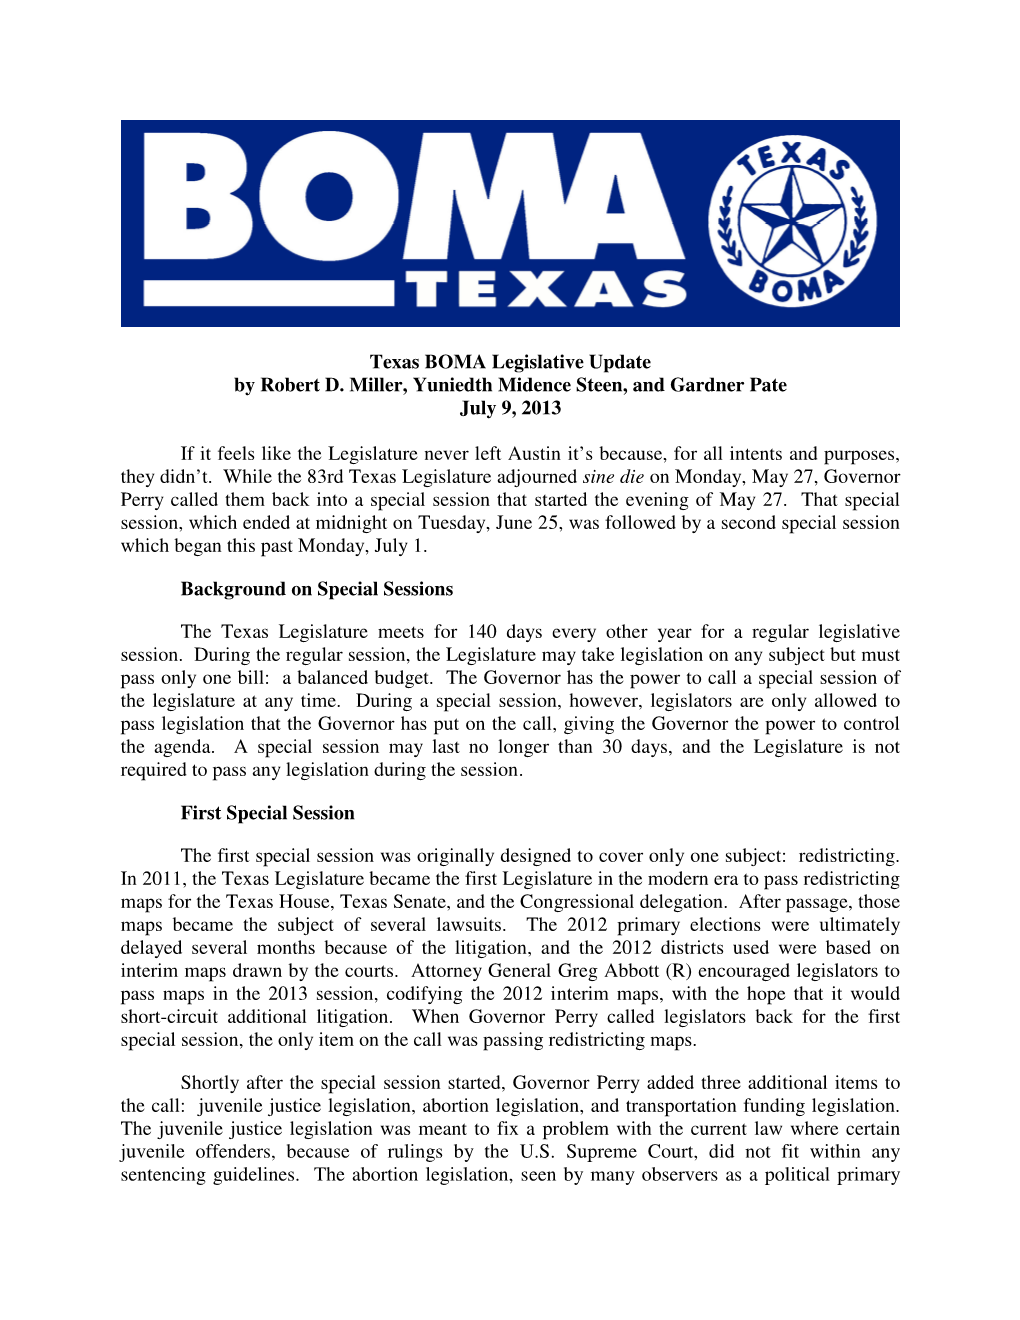 Texas BOMA Legislative Update by Robert D. Miller, Yuniedth Midence Steen, and Gardner Pate July 9, 2013